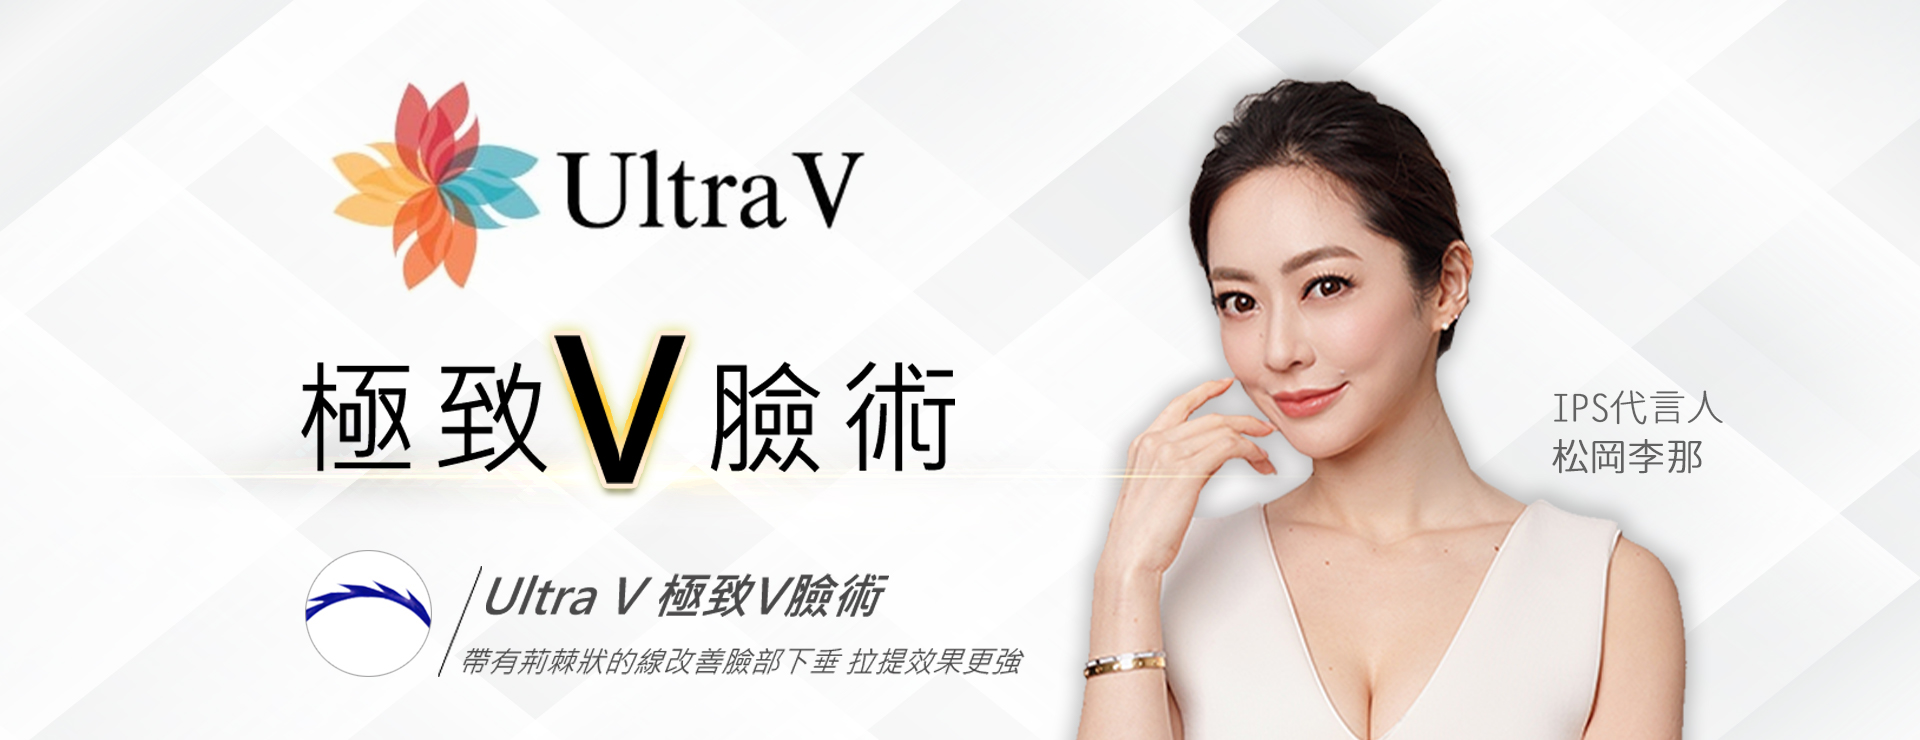 UltraV極致V臉術,帶有荊棘狀的線改善臉部下垂,拉提效果更強,Ultra V 雙螺旋提拉術,兩條線螺旋在一起,使提拉達到雙倍效果